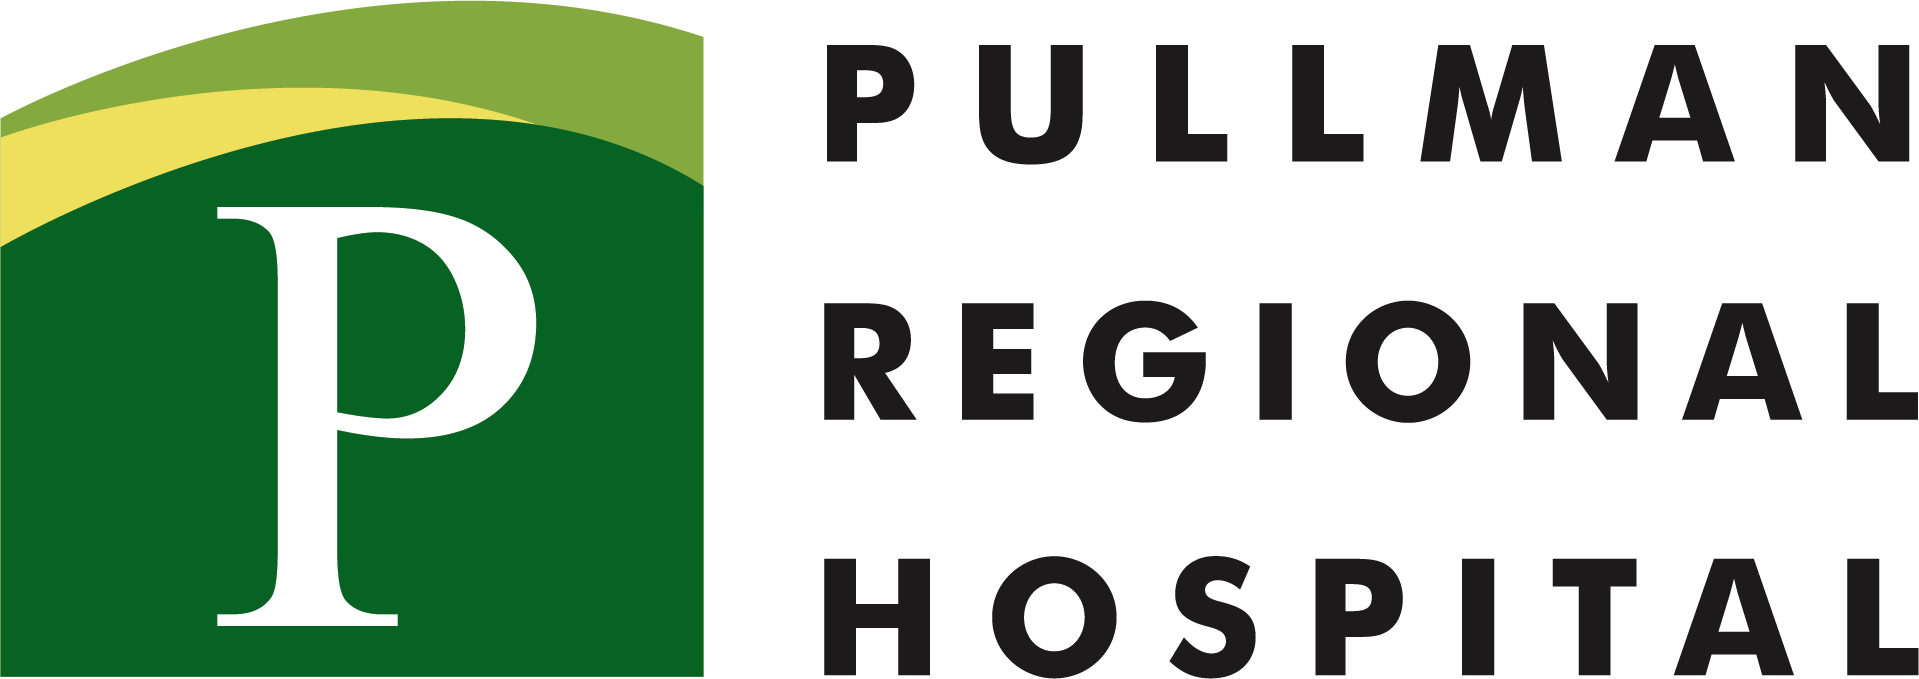 Pullman Regional Hospital Logo_Full Color.png